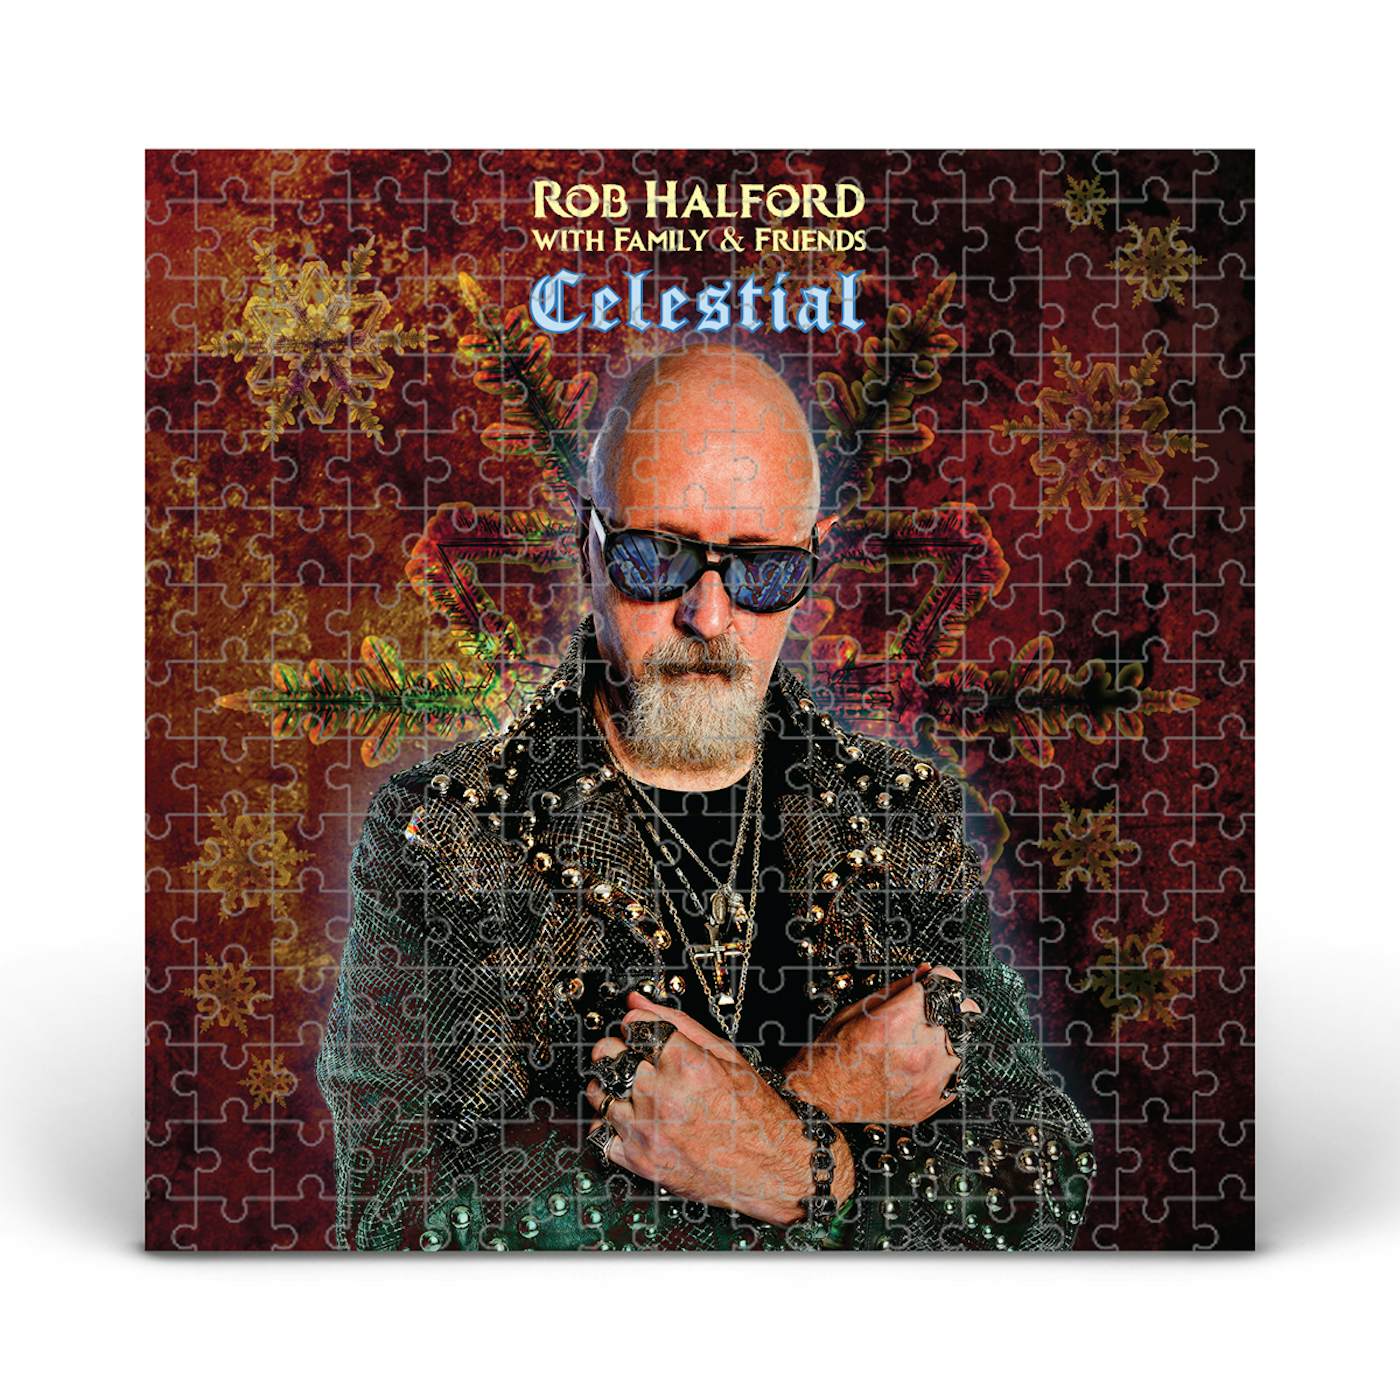 Rob Halford - Celestial 500pc Jigsaw Puzzle